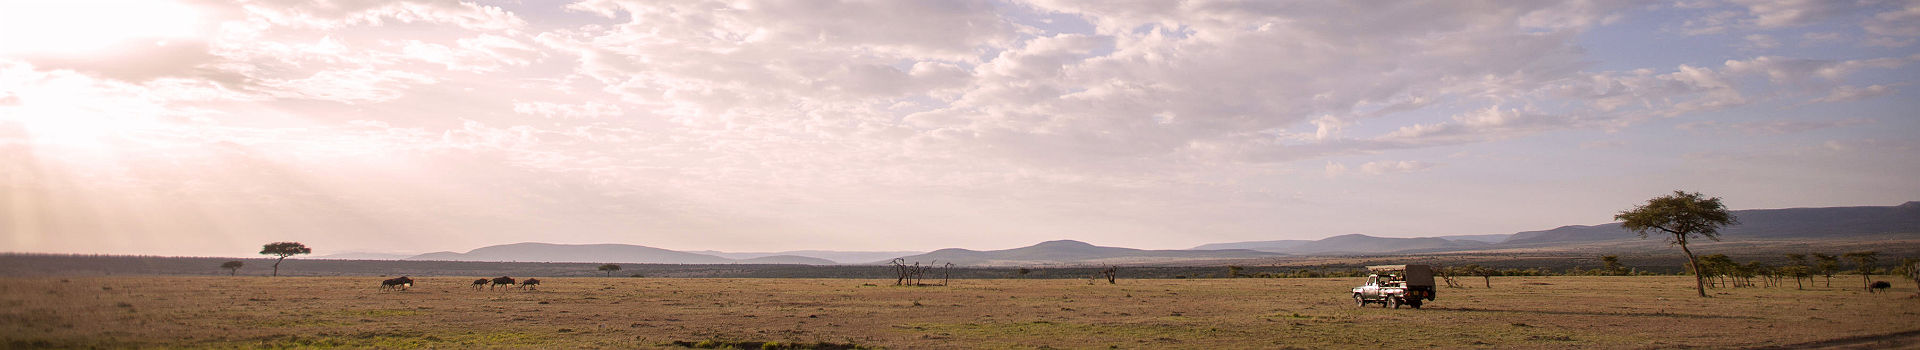 Africa Encounter Mara